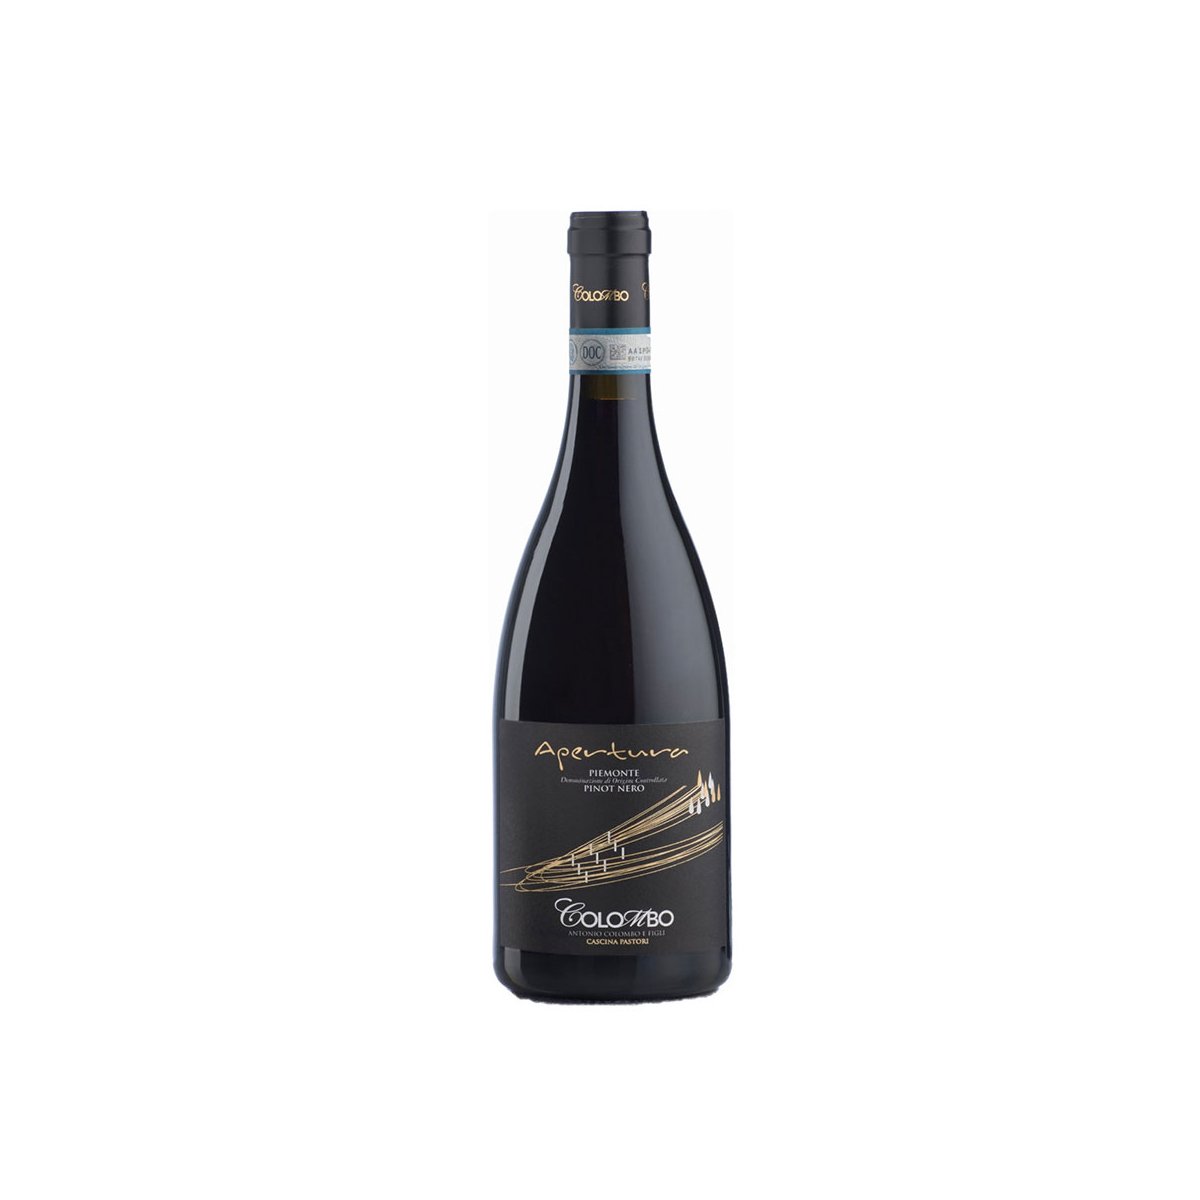 Apertura Pinot nero 2014  Colombo Cascina Pastori - Piemonte